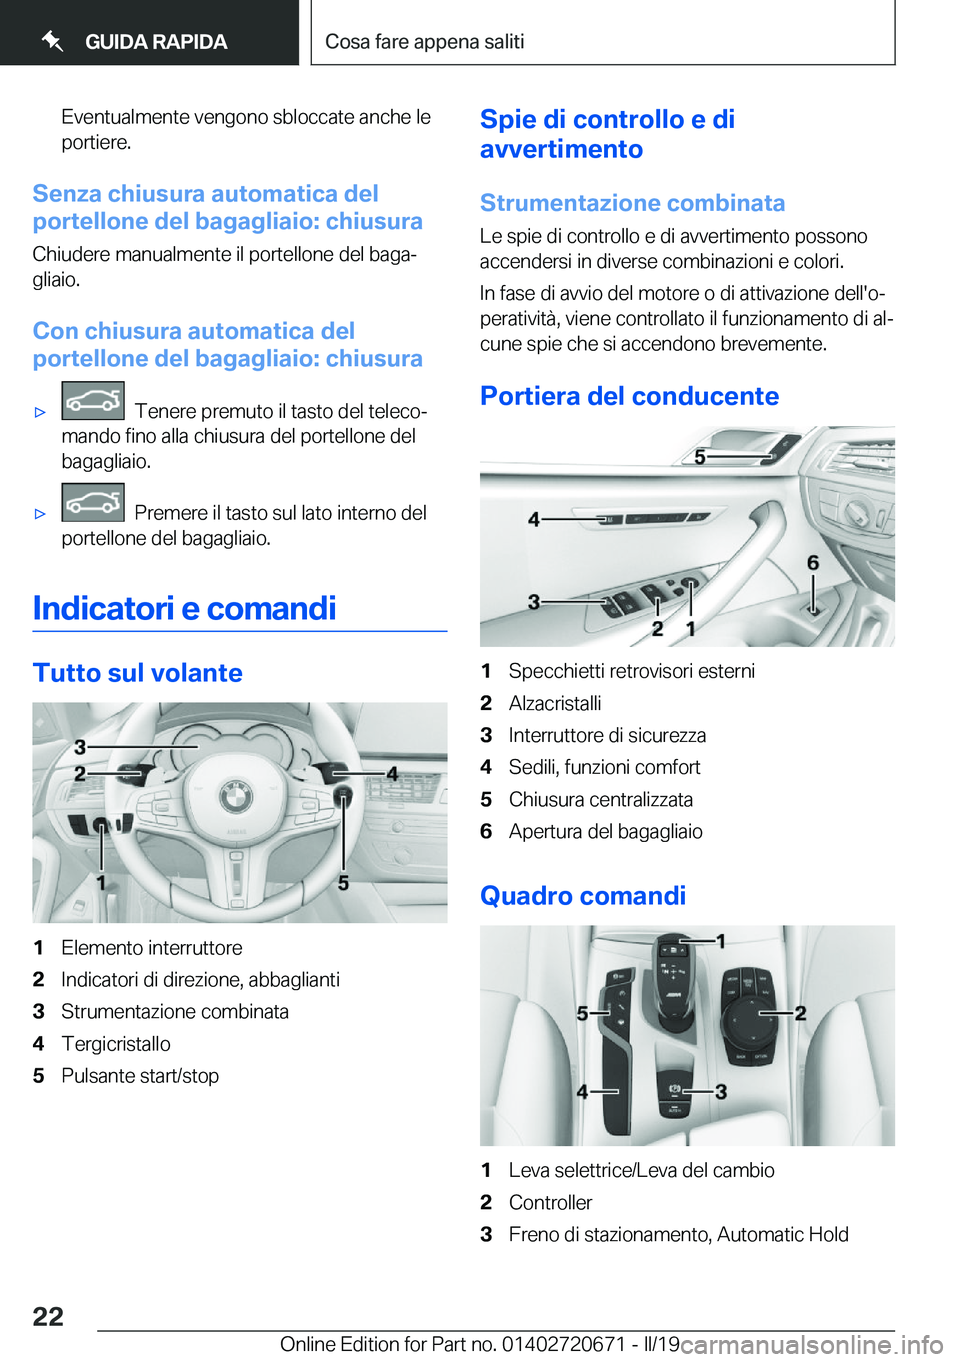 BMW M5 2019  Libretti Di Uso E manutenzione (in Italian) �E�v�e�n�t�u�a�l�m�e�n�t�e��v�e�n�g�o�n�o��s�b�l�o�c�c�a�t�e��a�n�c�h�e��l�e
�p�o�r�t�i�e�r�e�.
�S�e�n�z�a��c�h�i�u�s�u�r�a��a�u�t�o�m�a�t�i�c�a��d�e�l
�p�o�r�t�e�l�l�o�n�e��d�e�l��b�a�g�a�g�